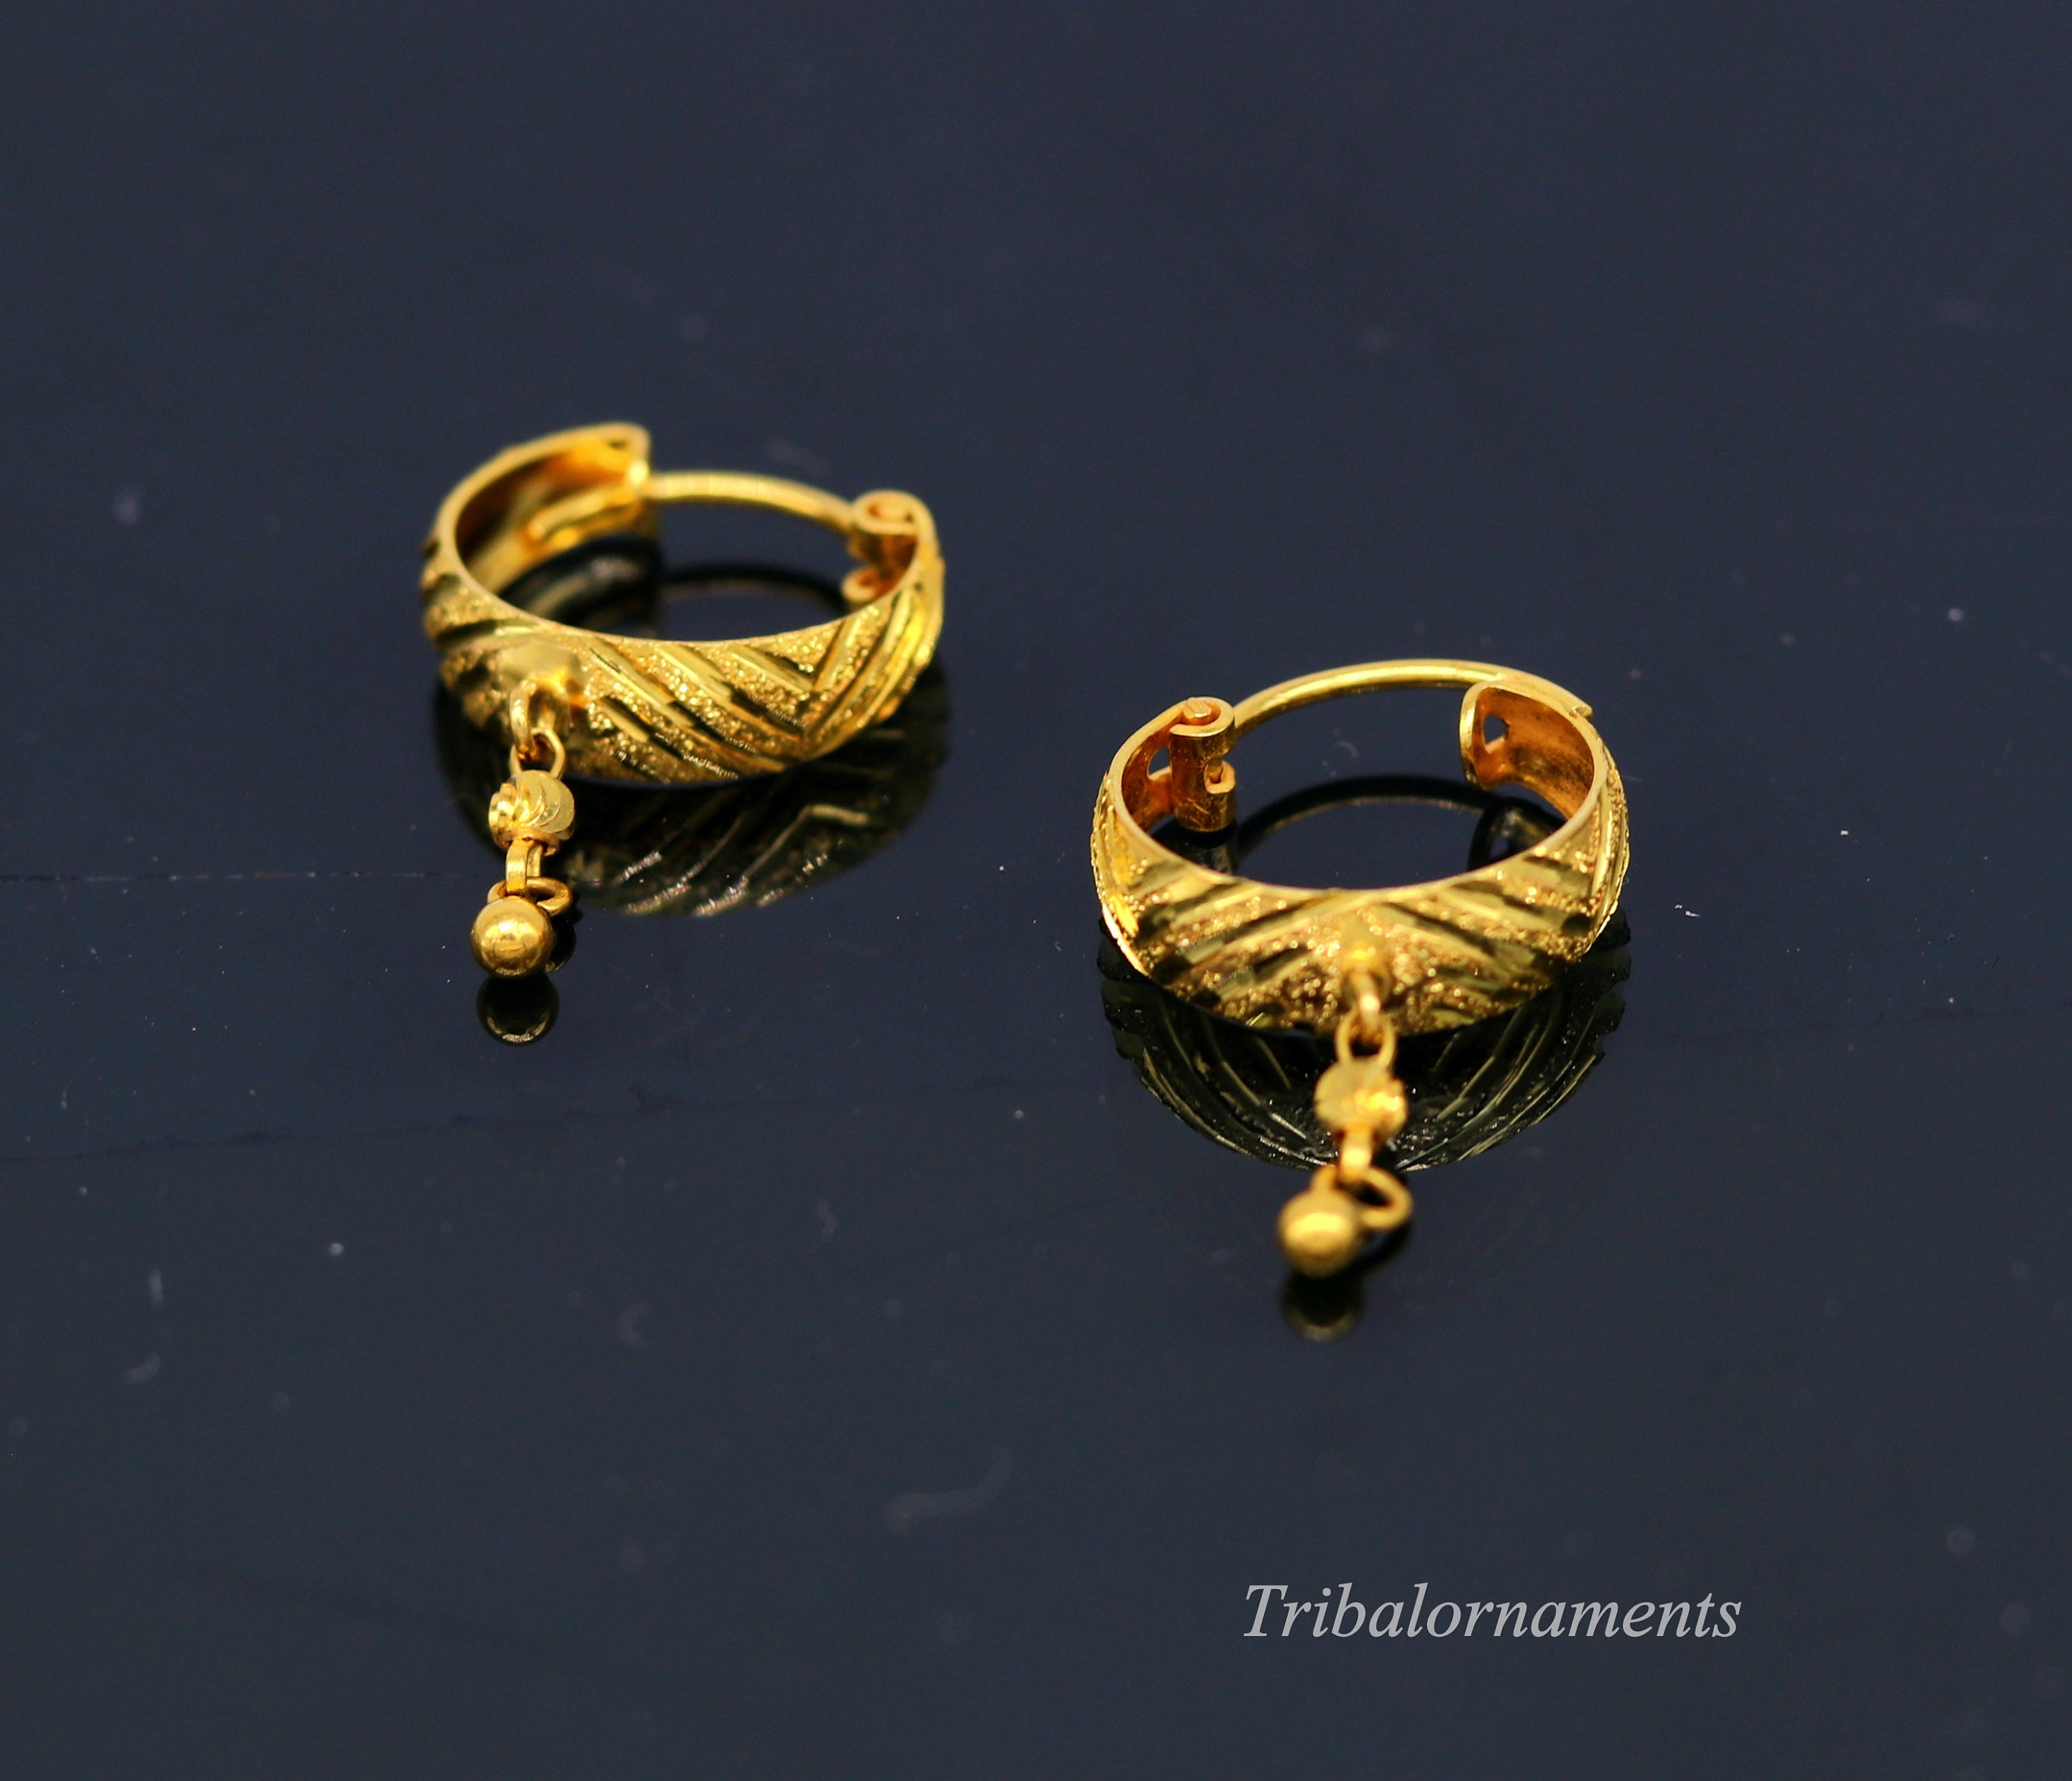 Vintage design 18kt yellow gold handmade fabulous hoops earring bali,  amazing customized gifting unisex tribal jewelry ho44